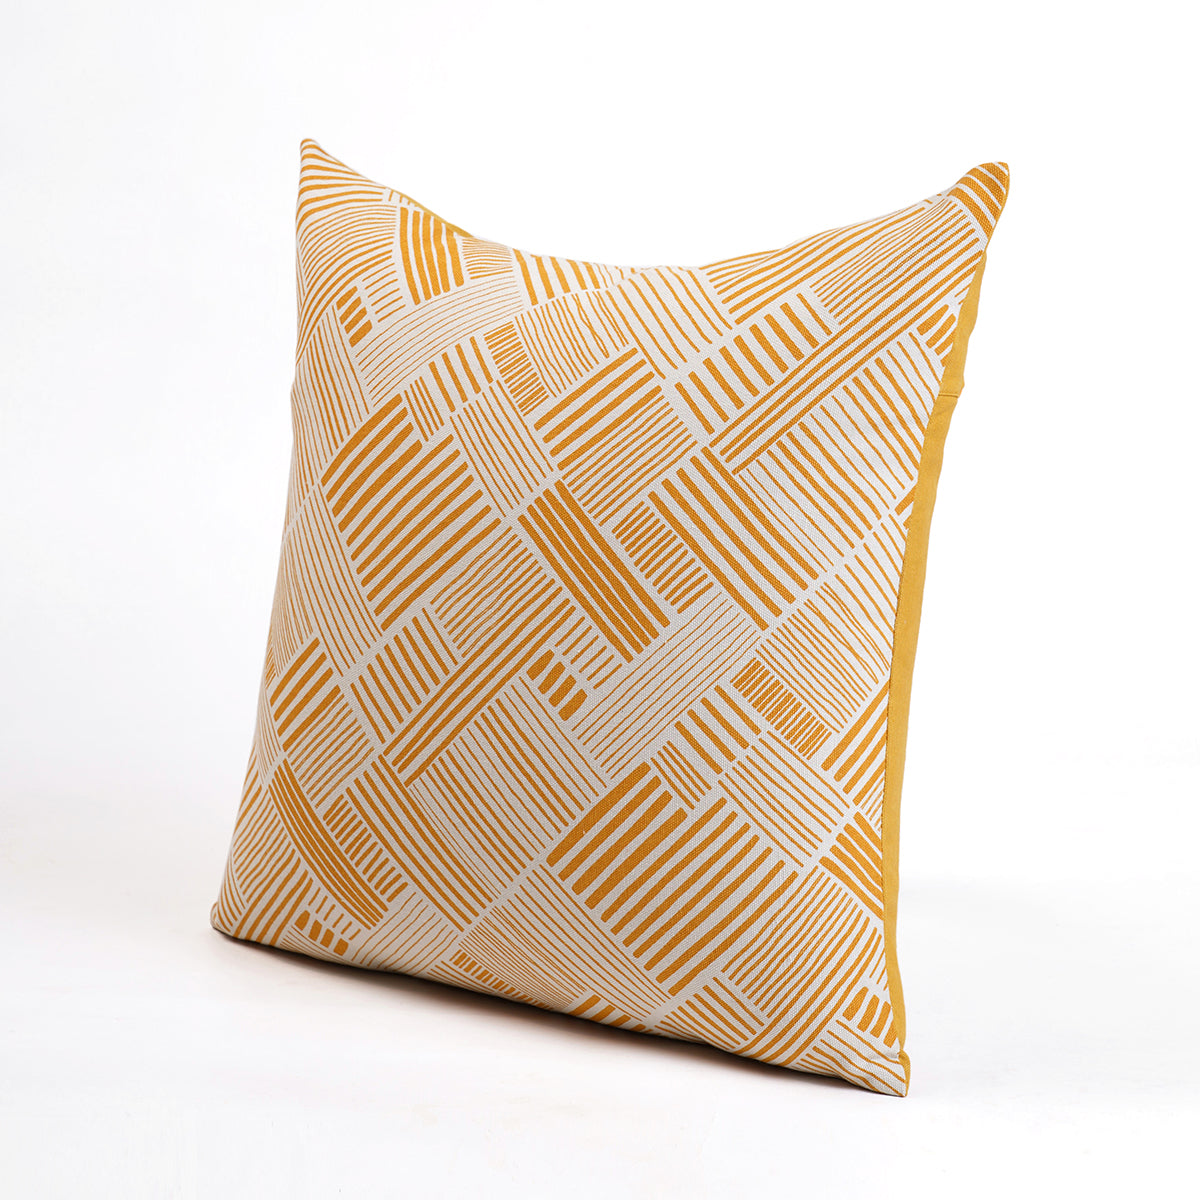 MODERN RETRO - Mustard Yellow throw pillow cover, geometrical print, cotton pillow, sizes available